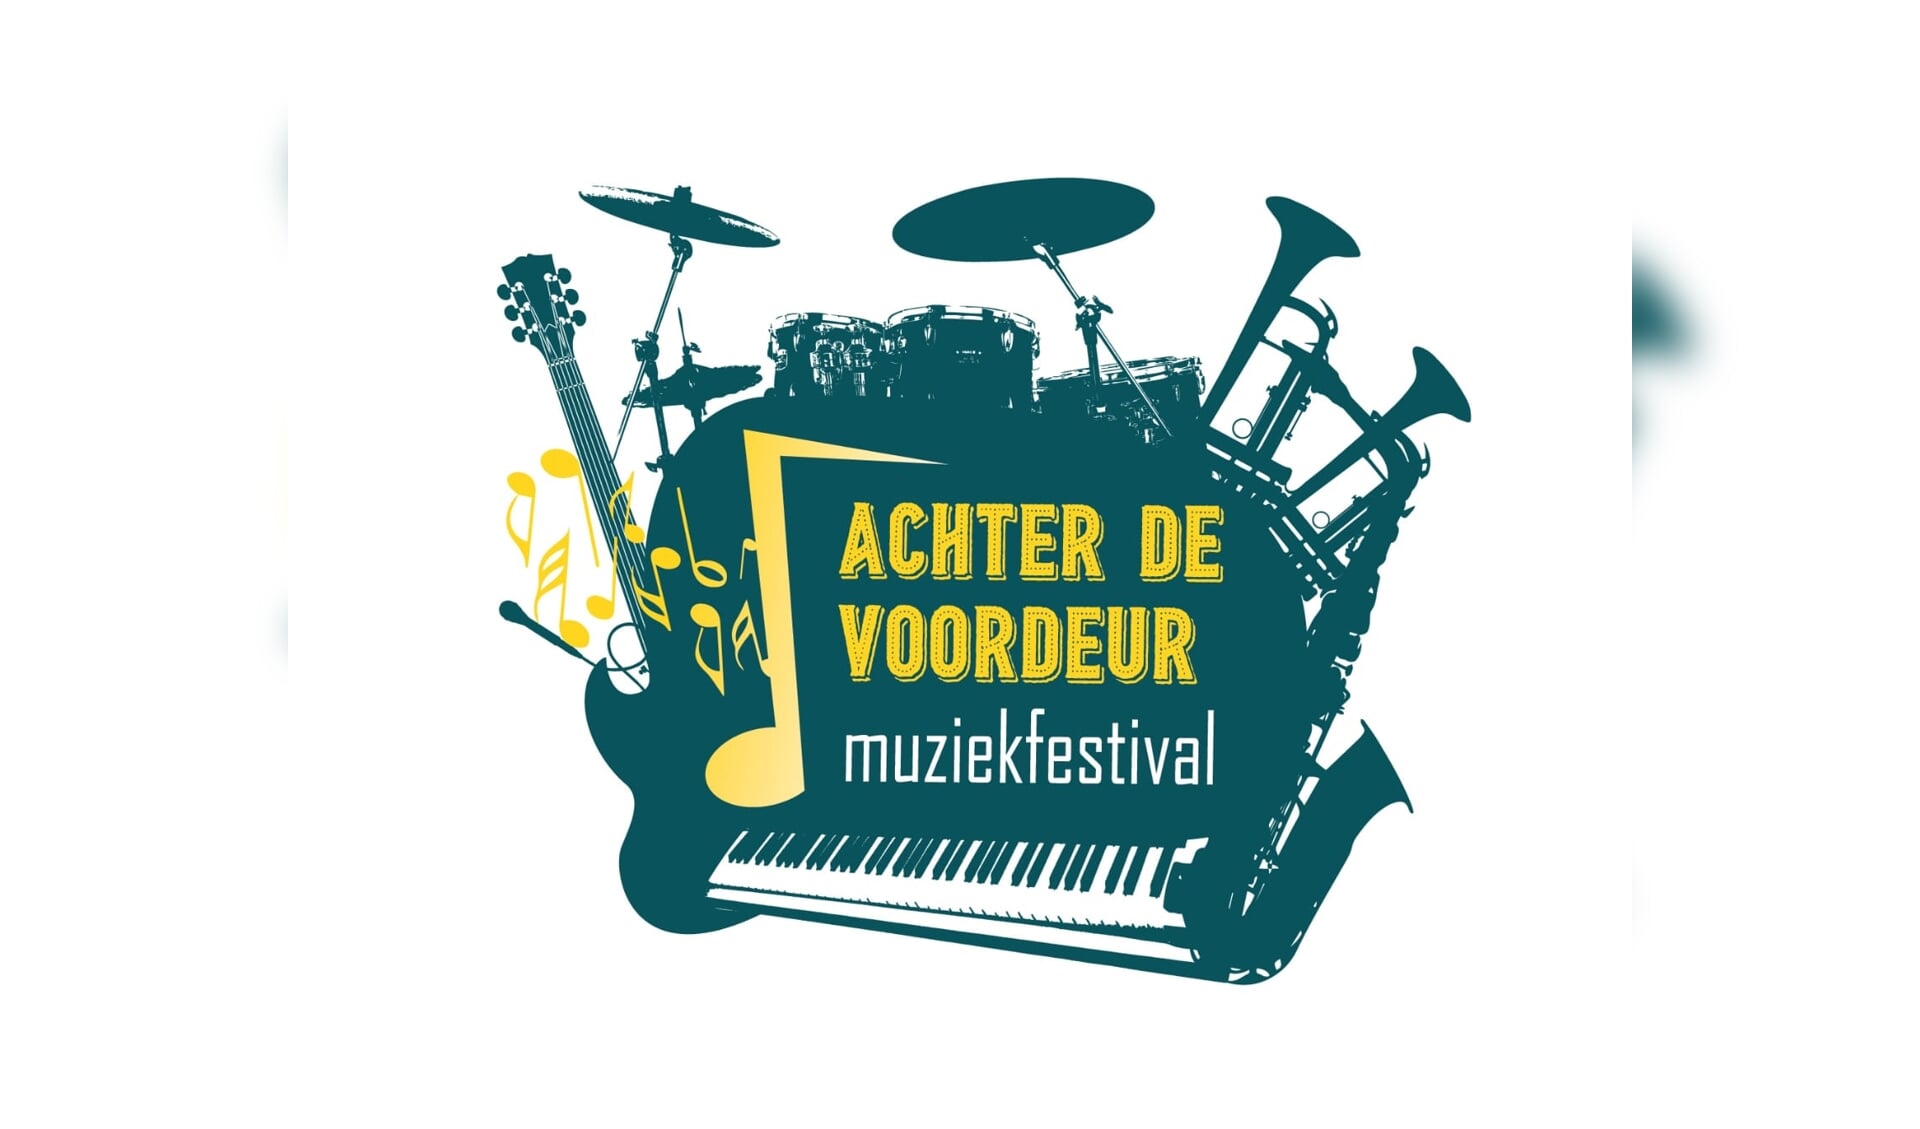 Muziekvereniging Berghem pakt uit met muziekfestival Achter de voordeur